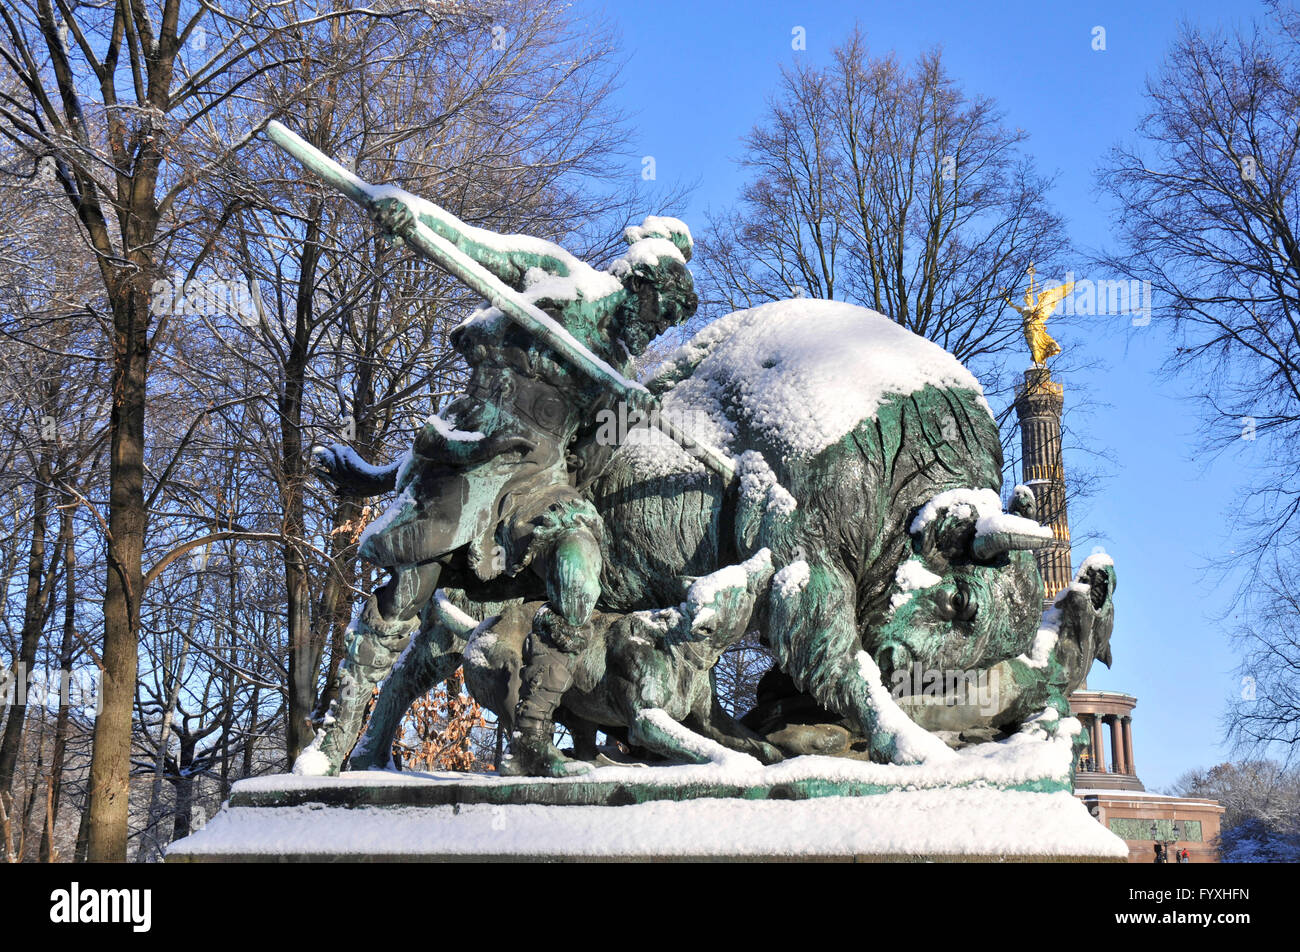 Sculpture en bronze, statue de bronze, Altgermanische Buffeljagd, par Fritz Schaper, Tiergarten, Berlin, Allemagne / Altgermanische Büffeljagd vieil allemand, chasse au bison Banque D'Images